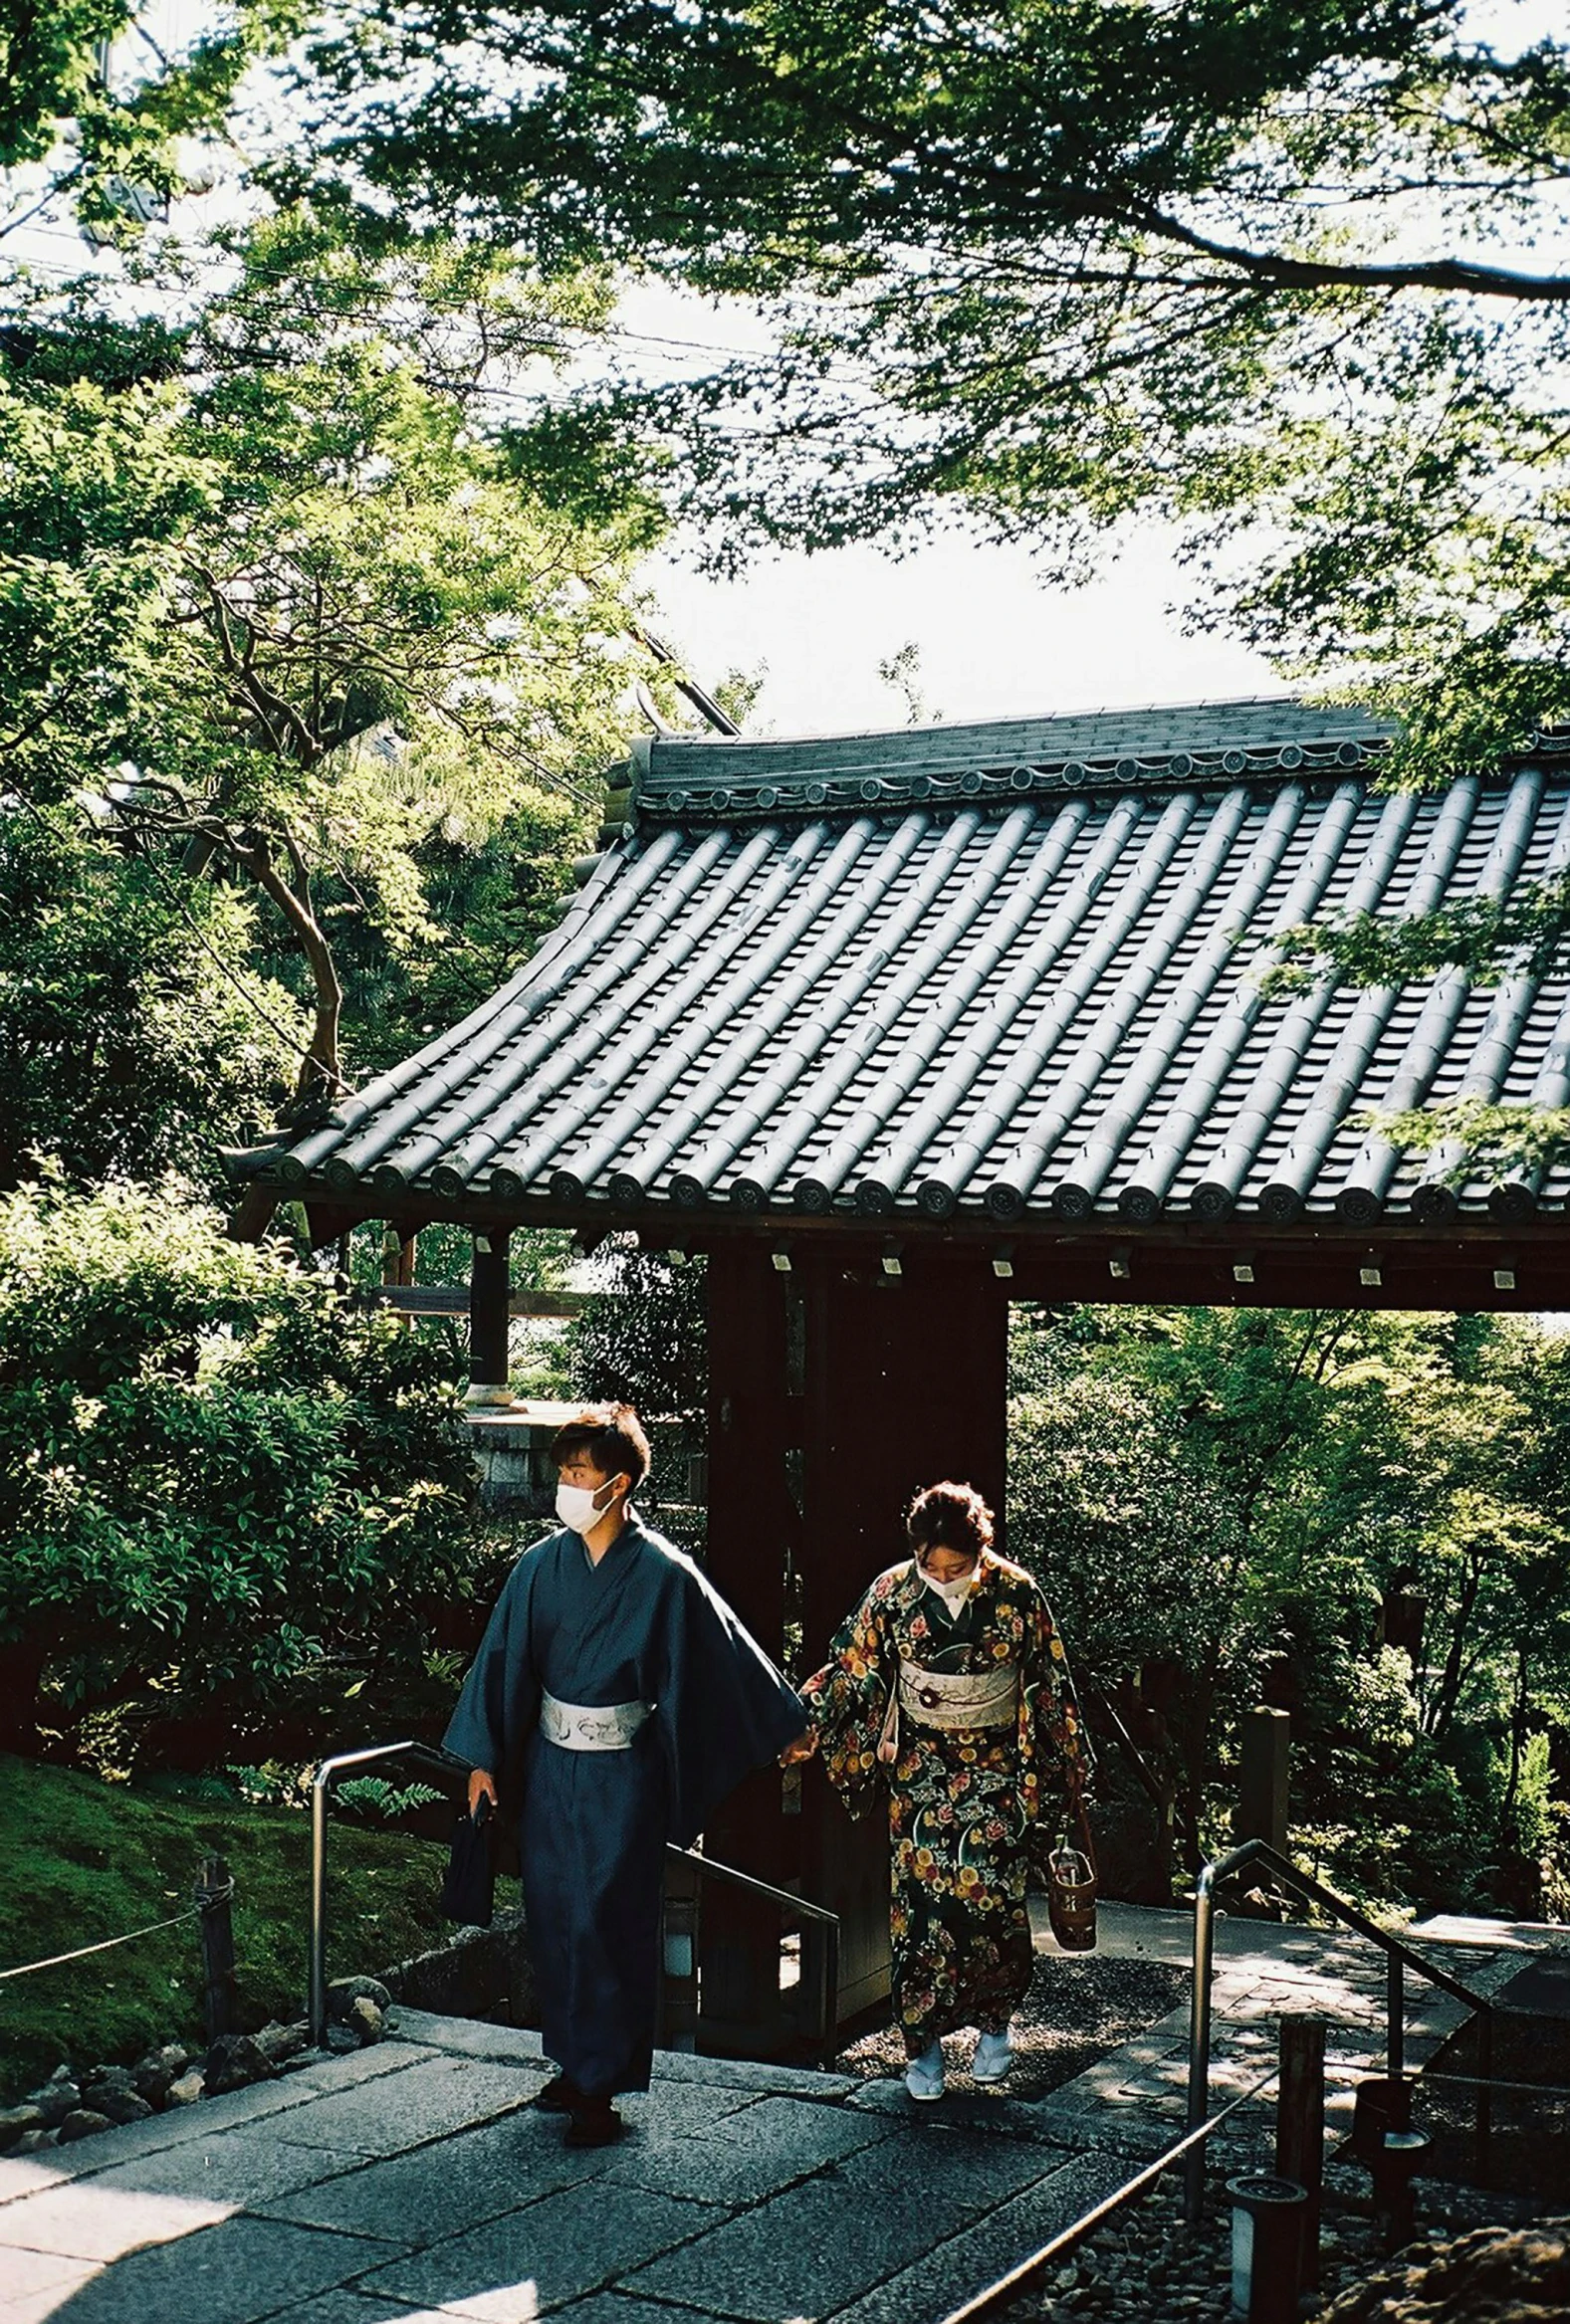 two men dressed in kimono standing near a small hut